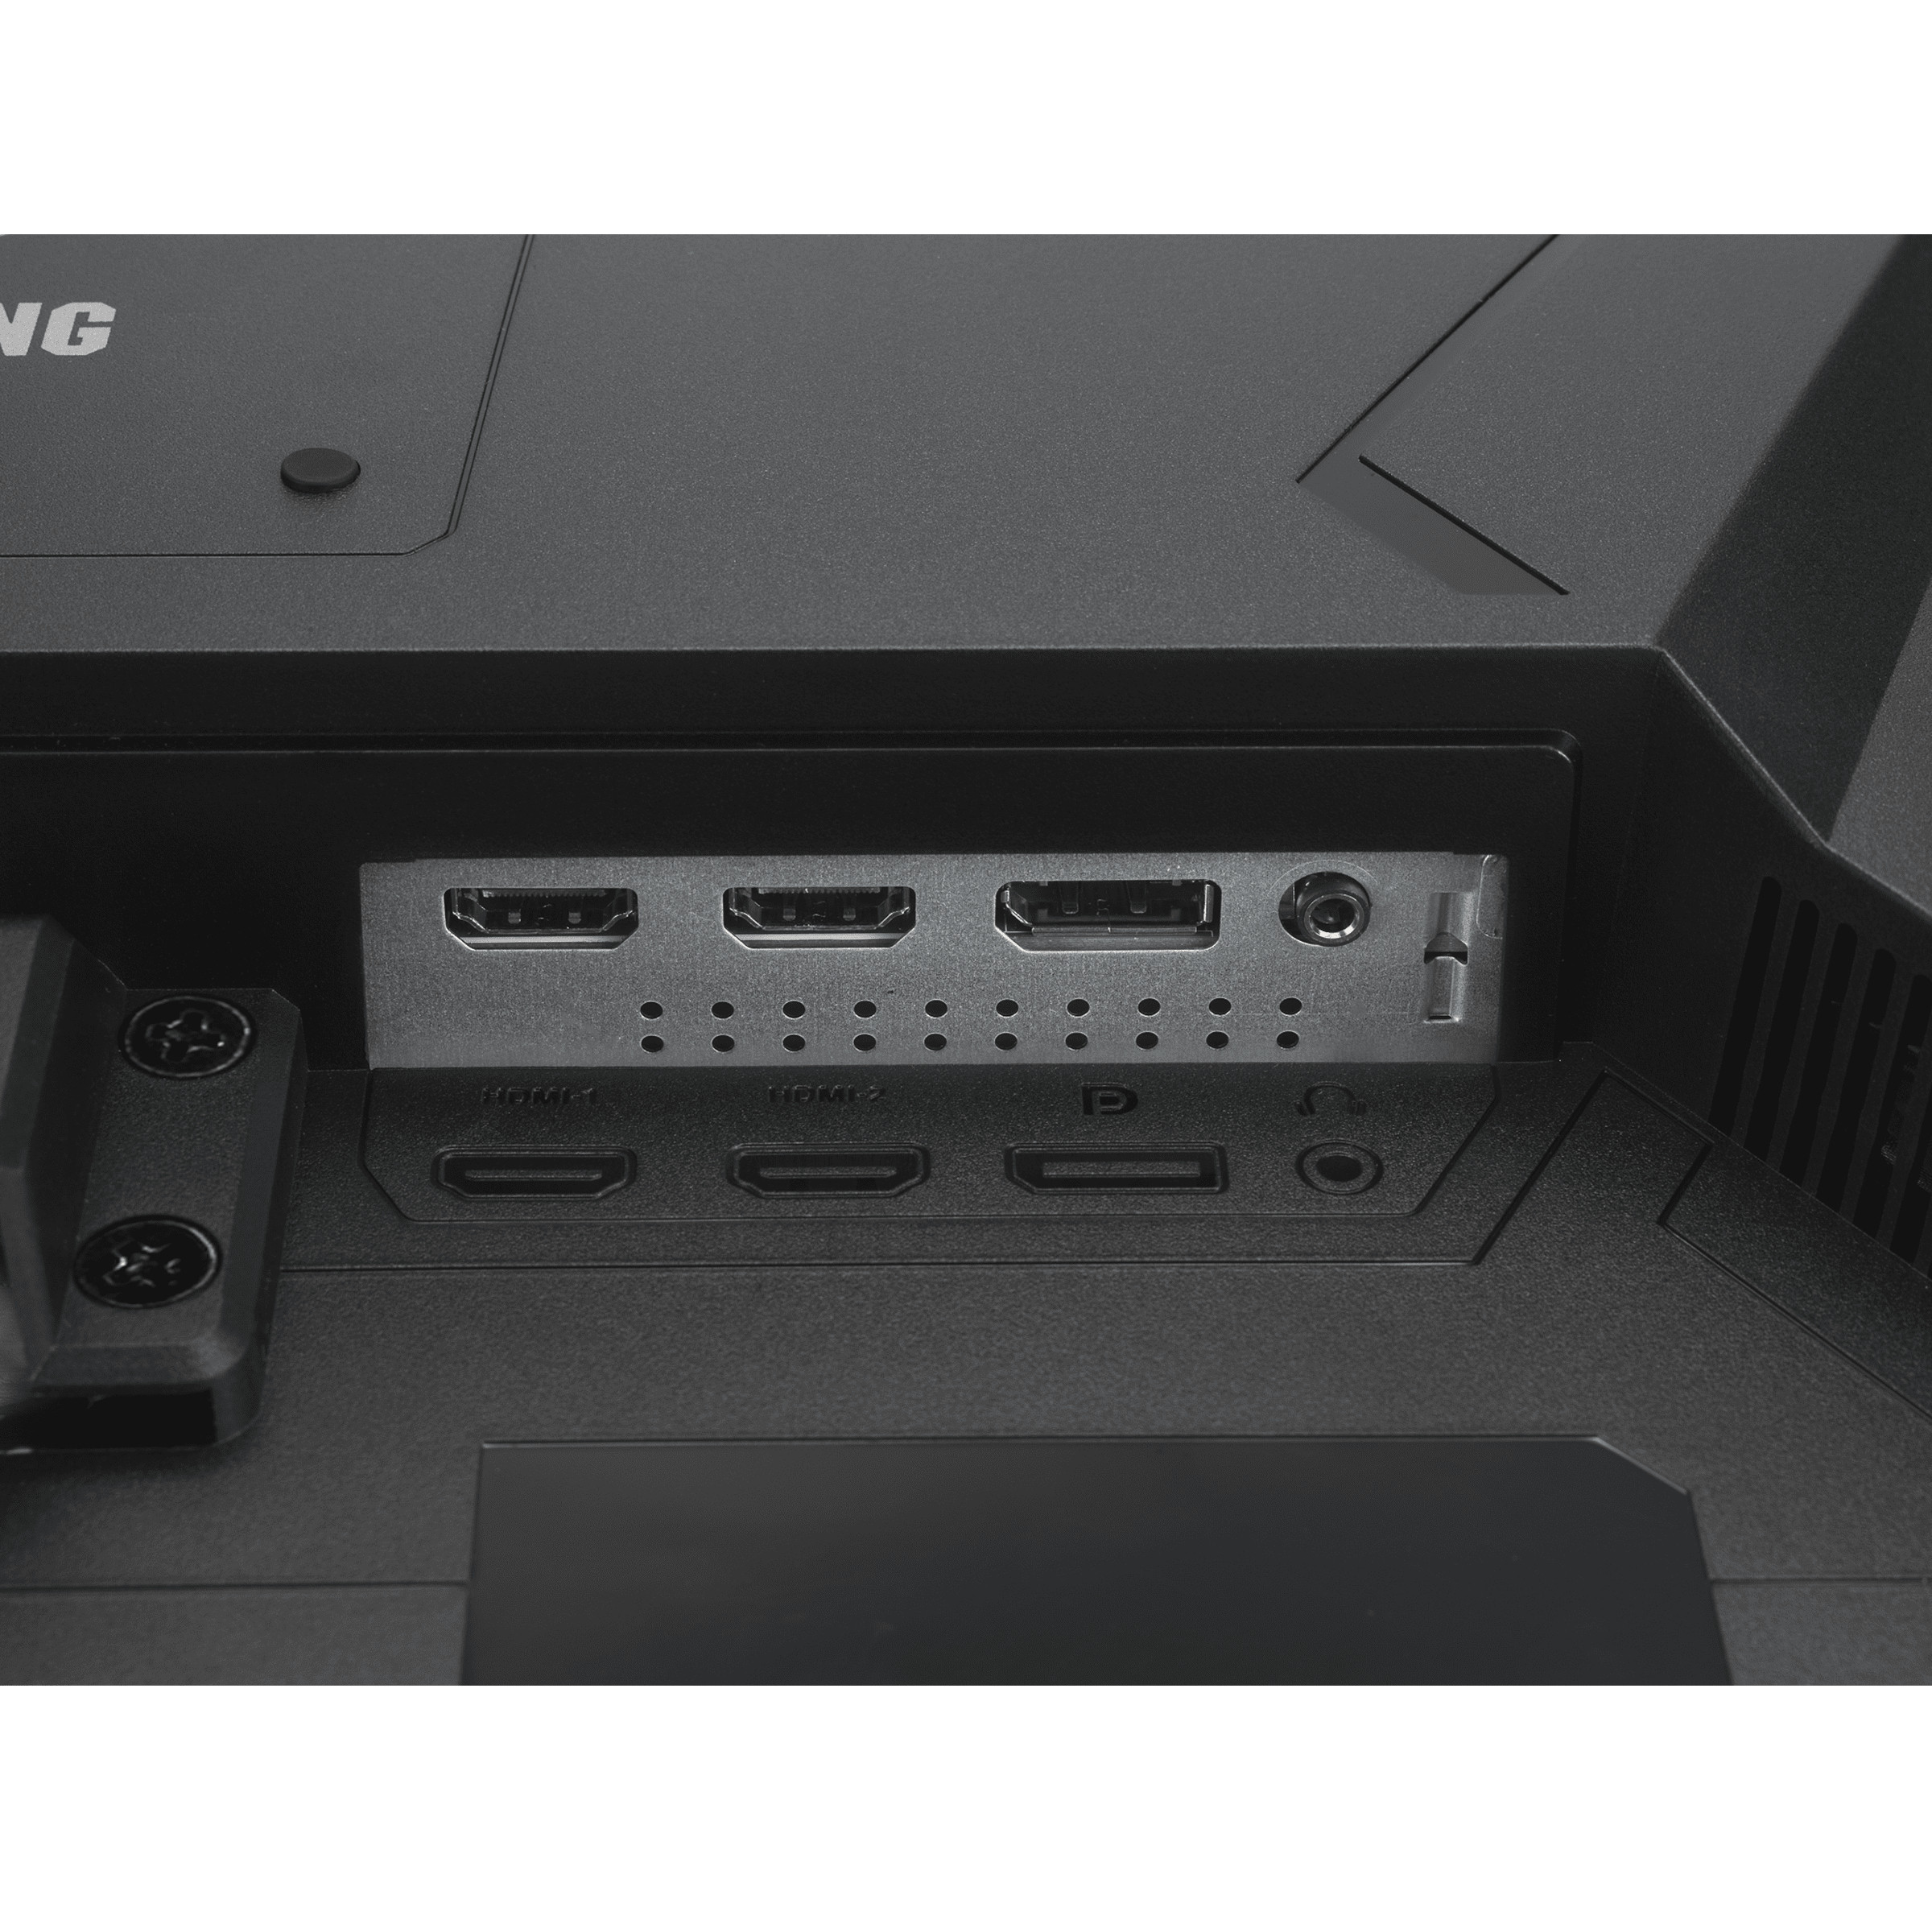 Asus TUF Gaming VG249Q1A 23.8 FHD LED IPS 165Hz 1ms FreeSync